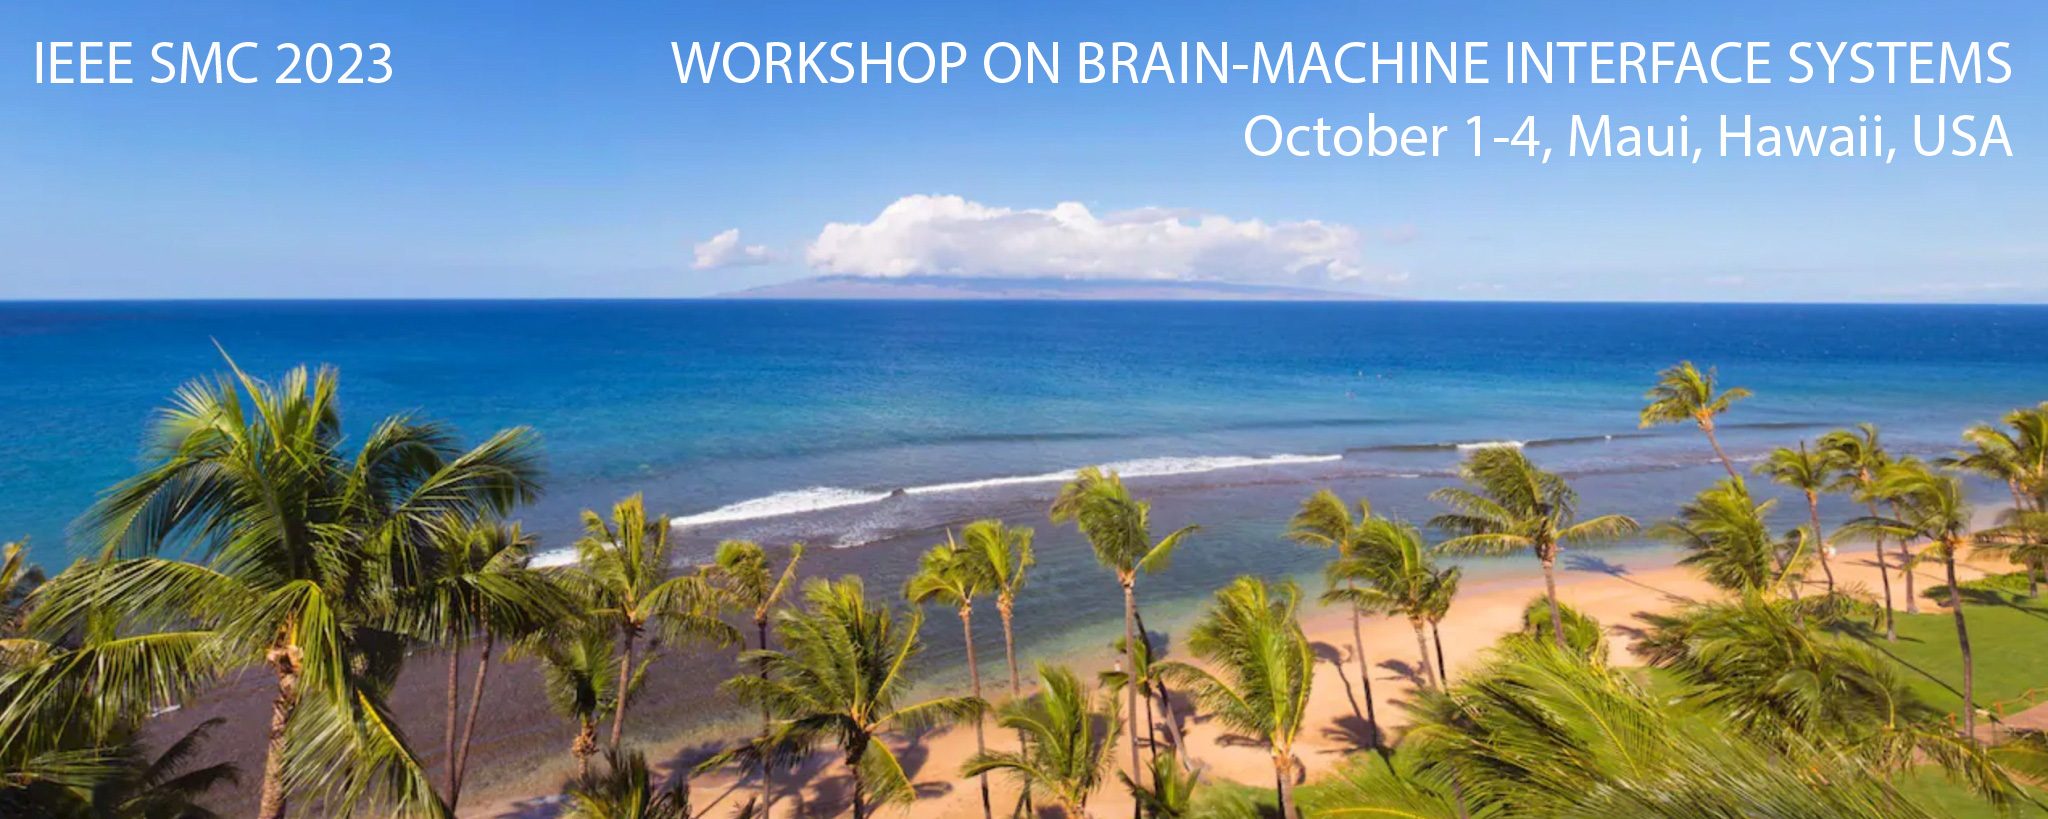 IEEE SMC 13th Workshop on Brain-Machine Interface Systems